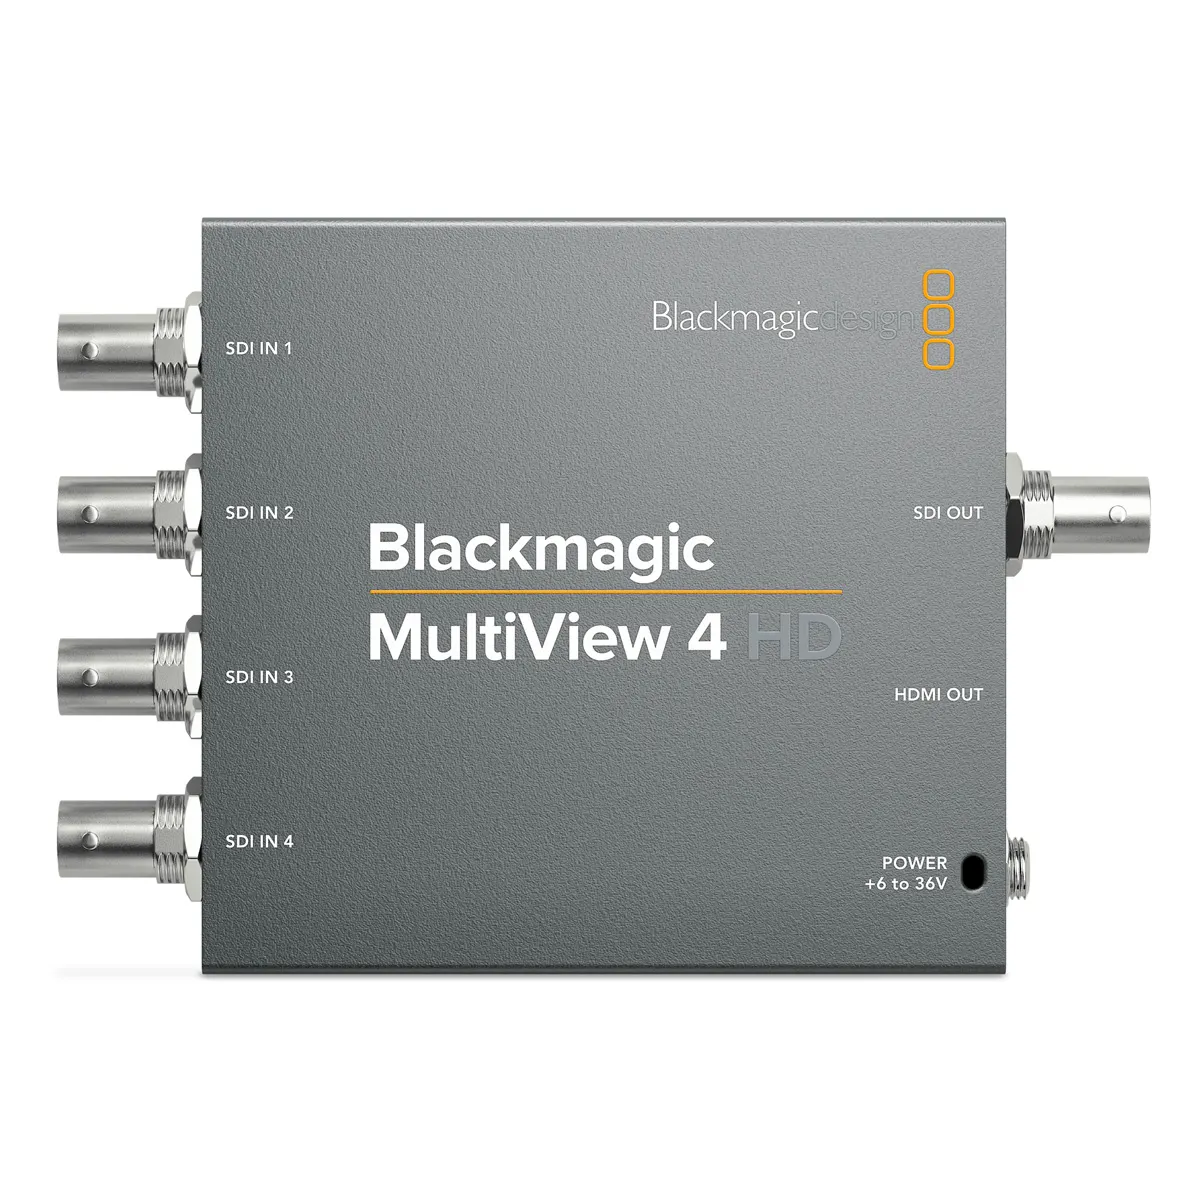 Blackmagic Multiview 4 HD - Vista superior